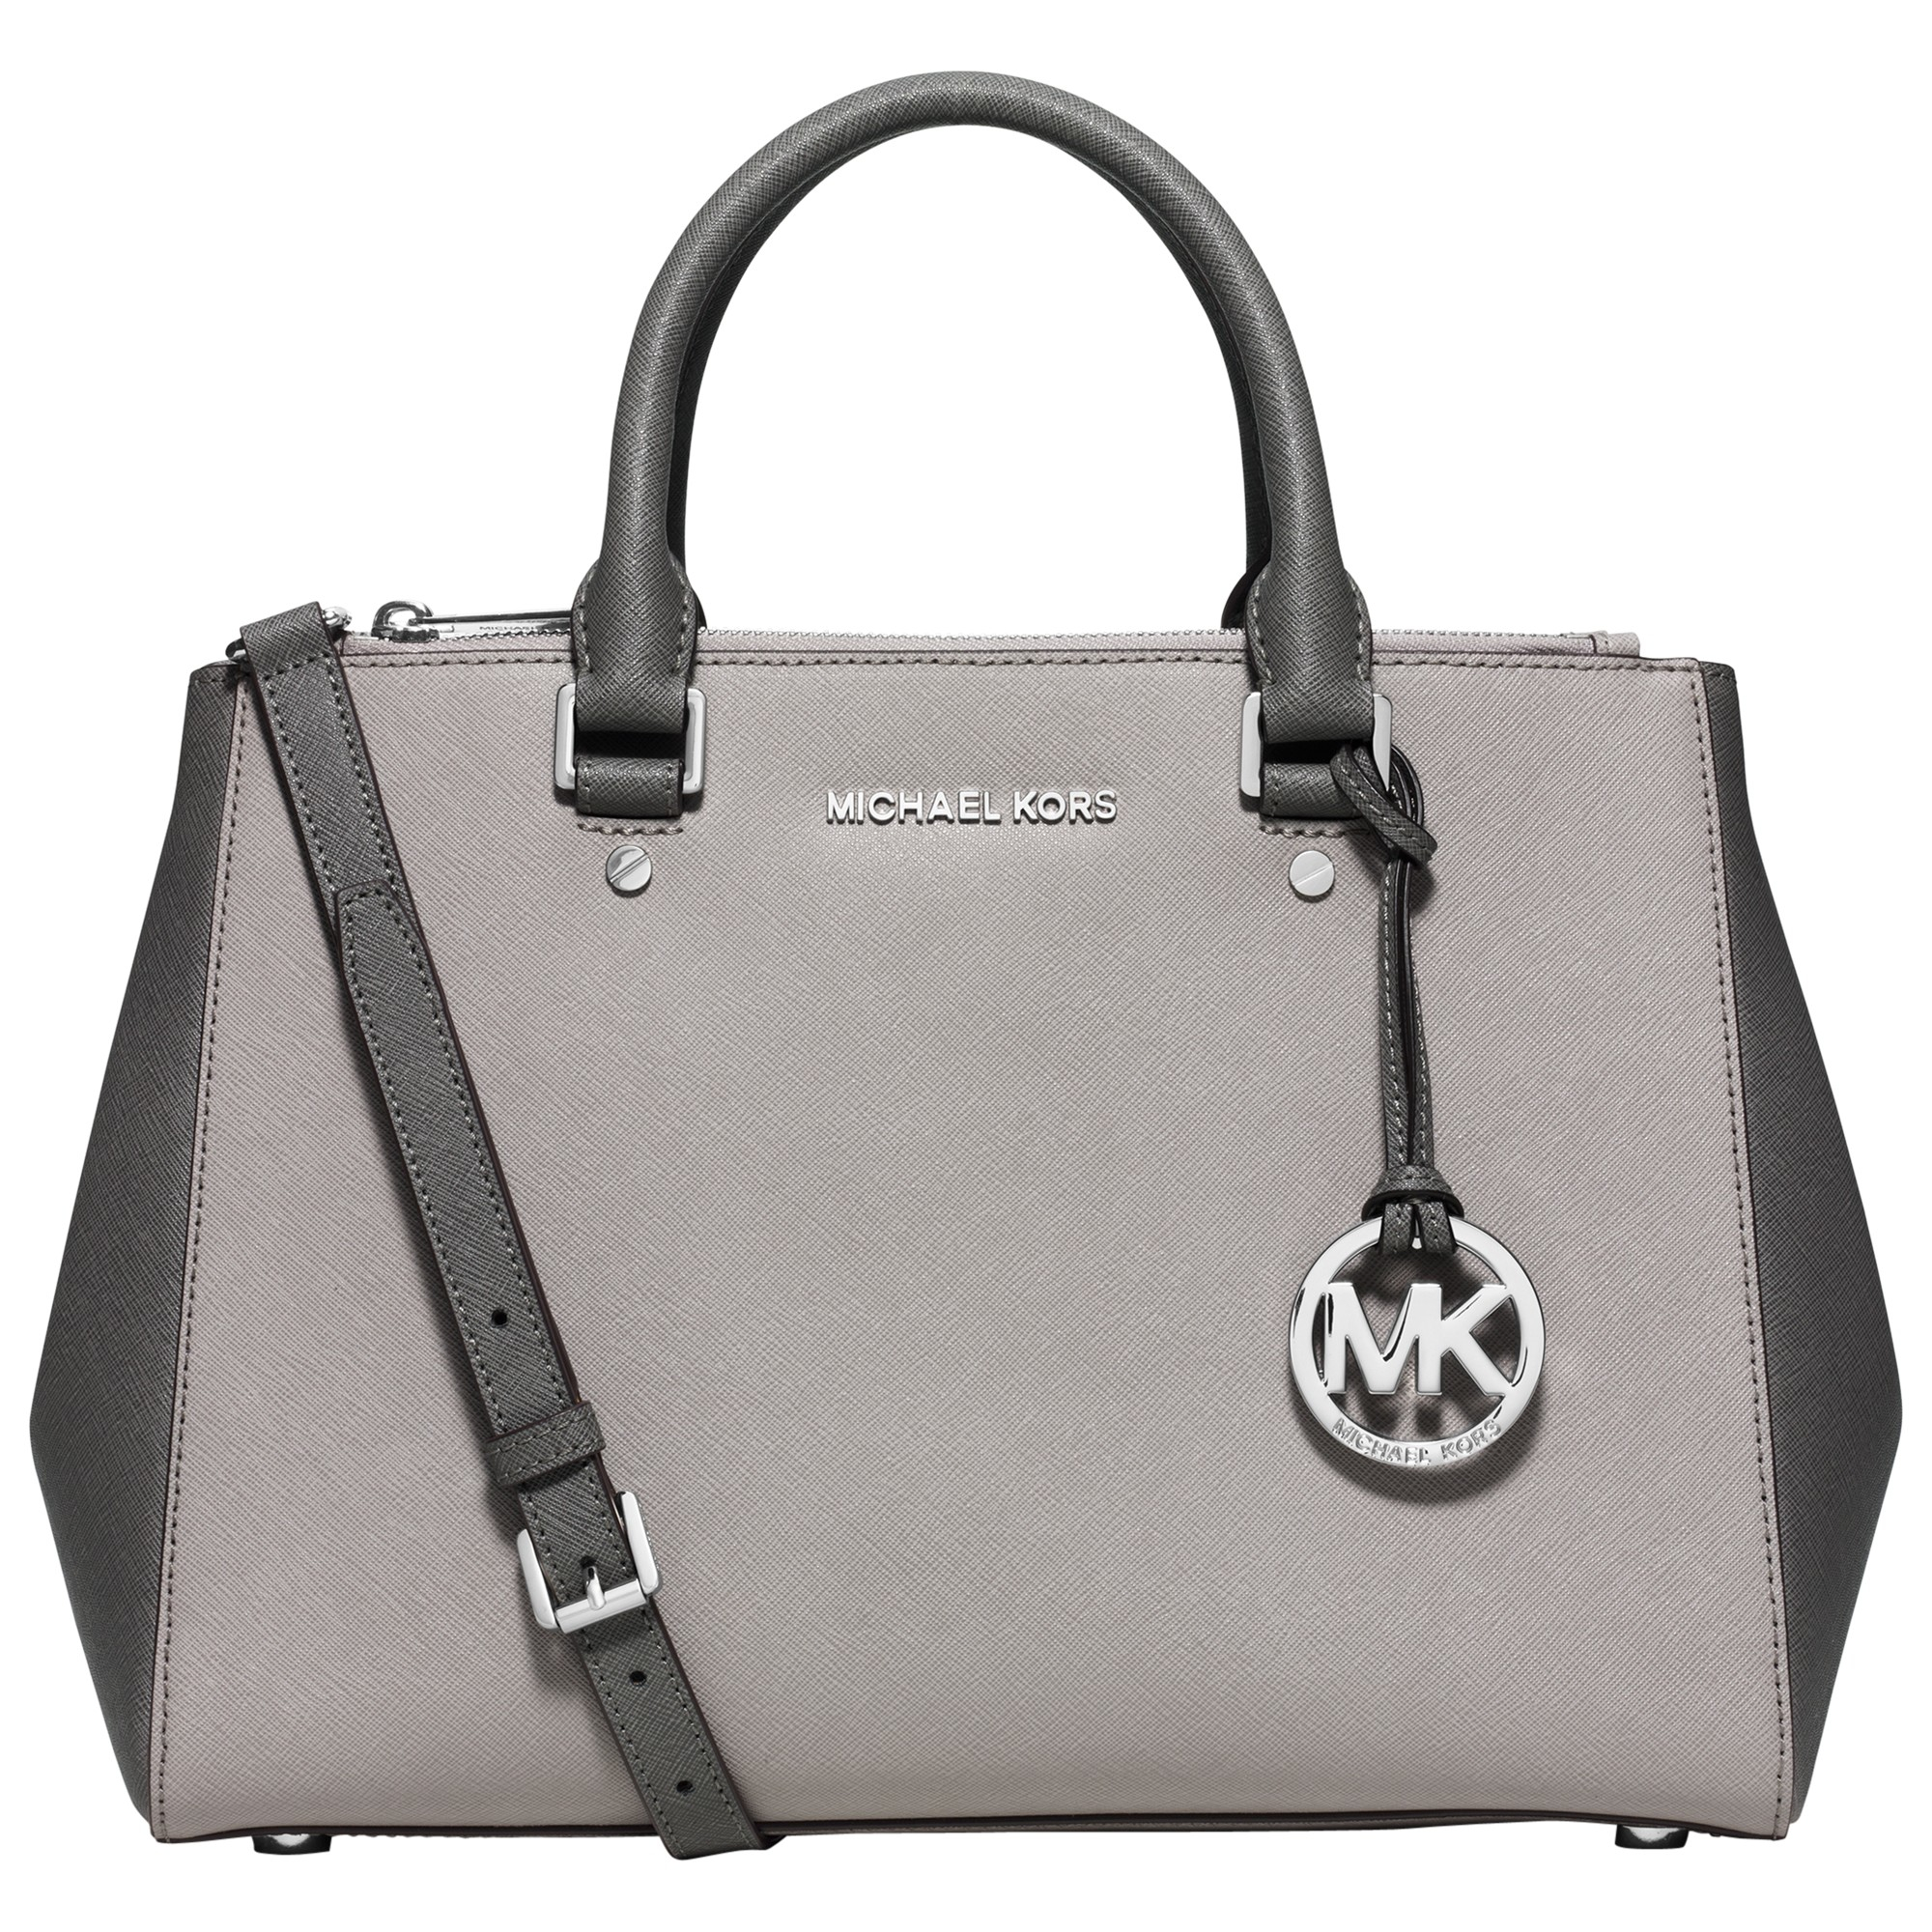 MICHAEL Michael Kors Sutton Medium Leather Satchel Bag in Grey (Grey) - Lyst